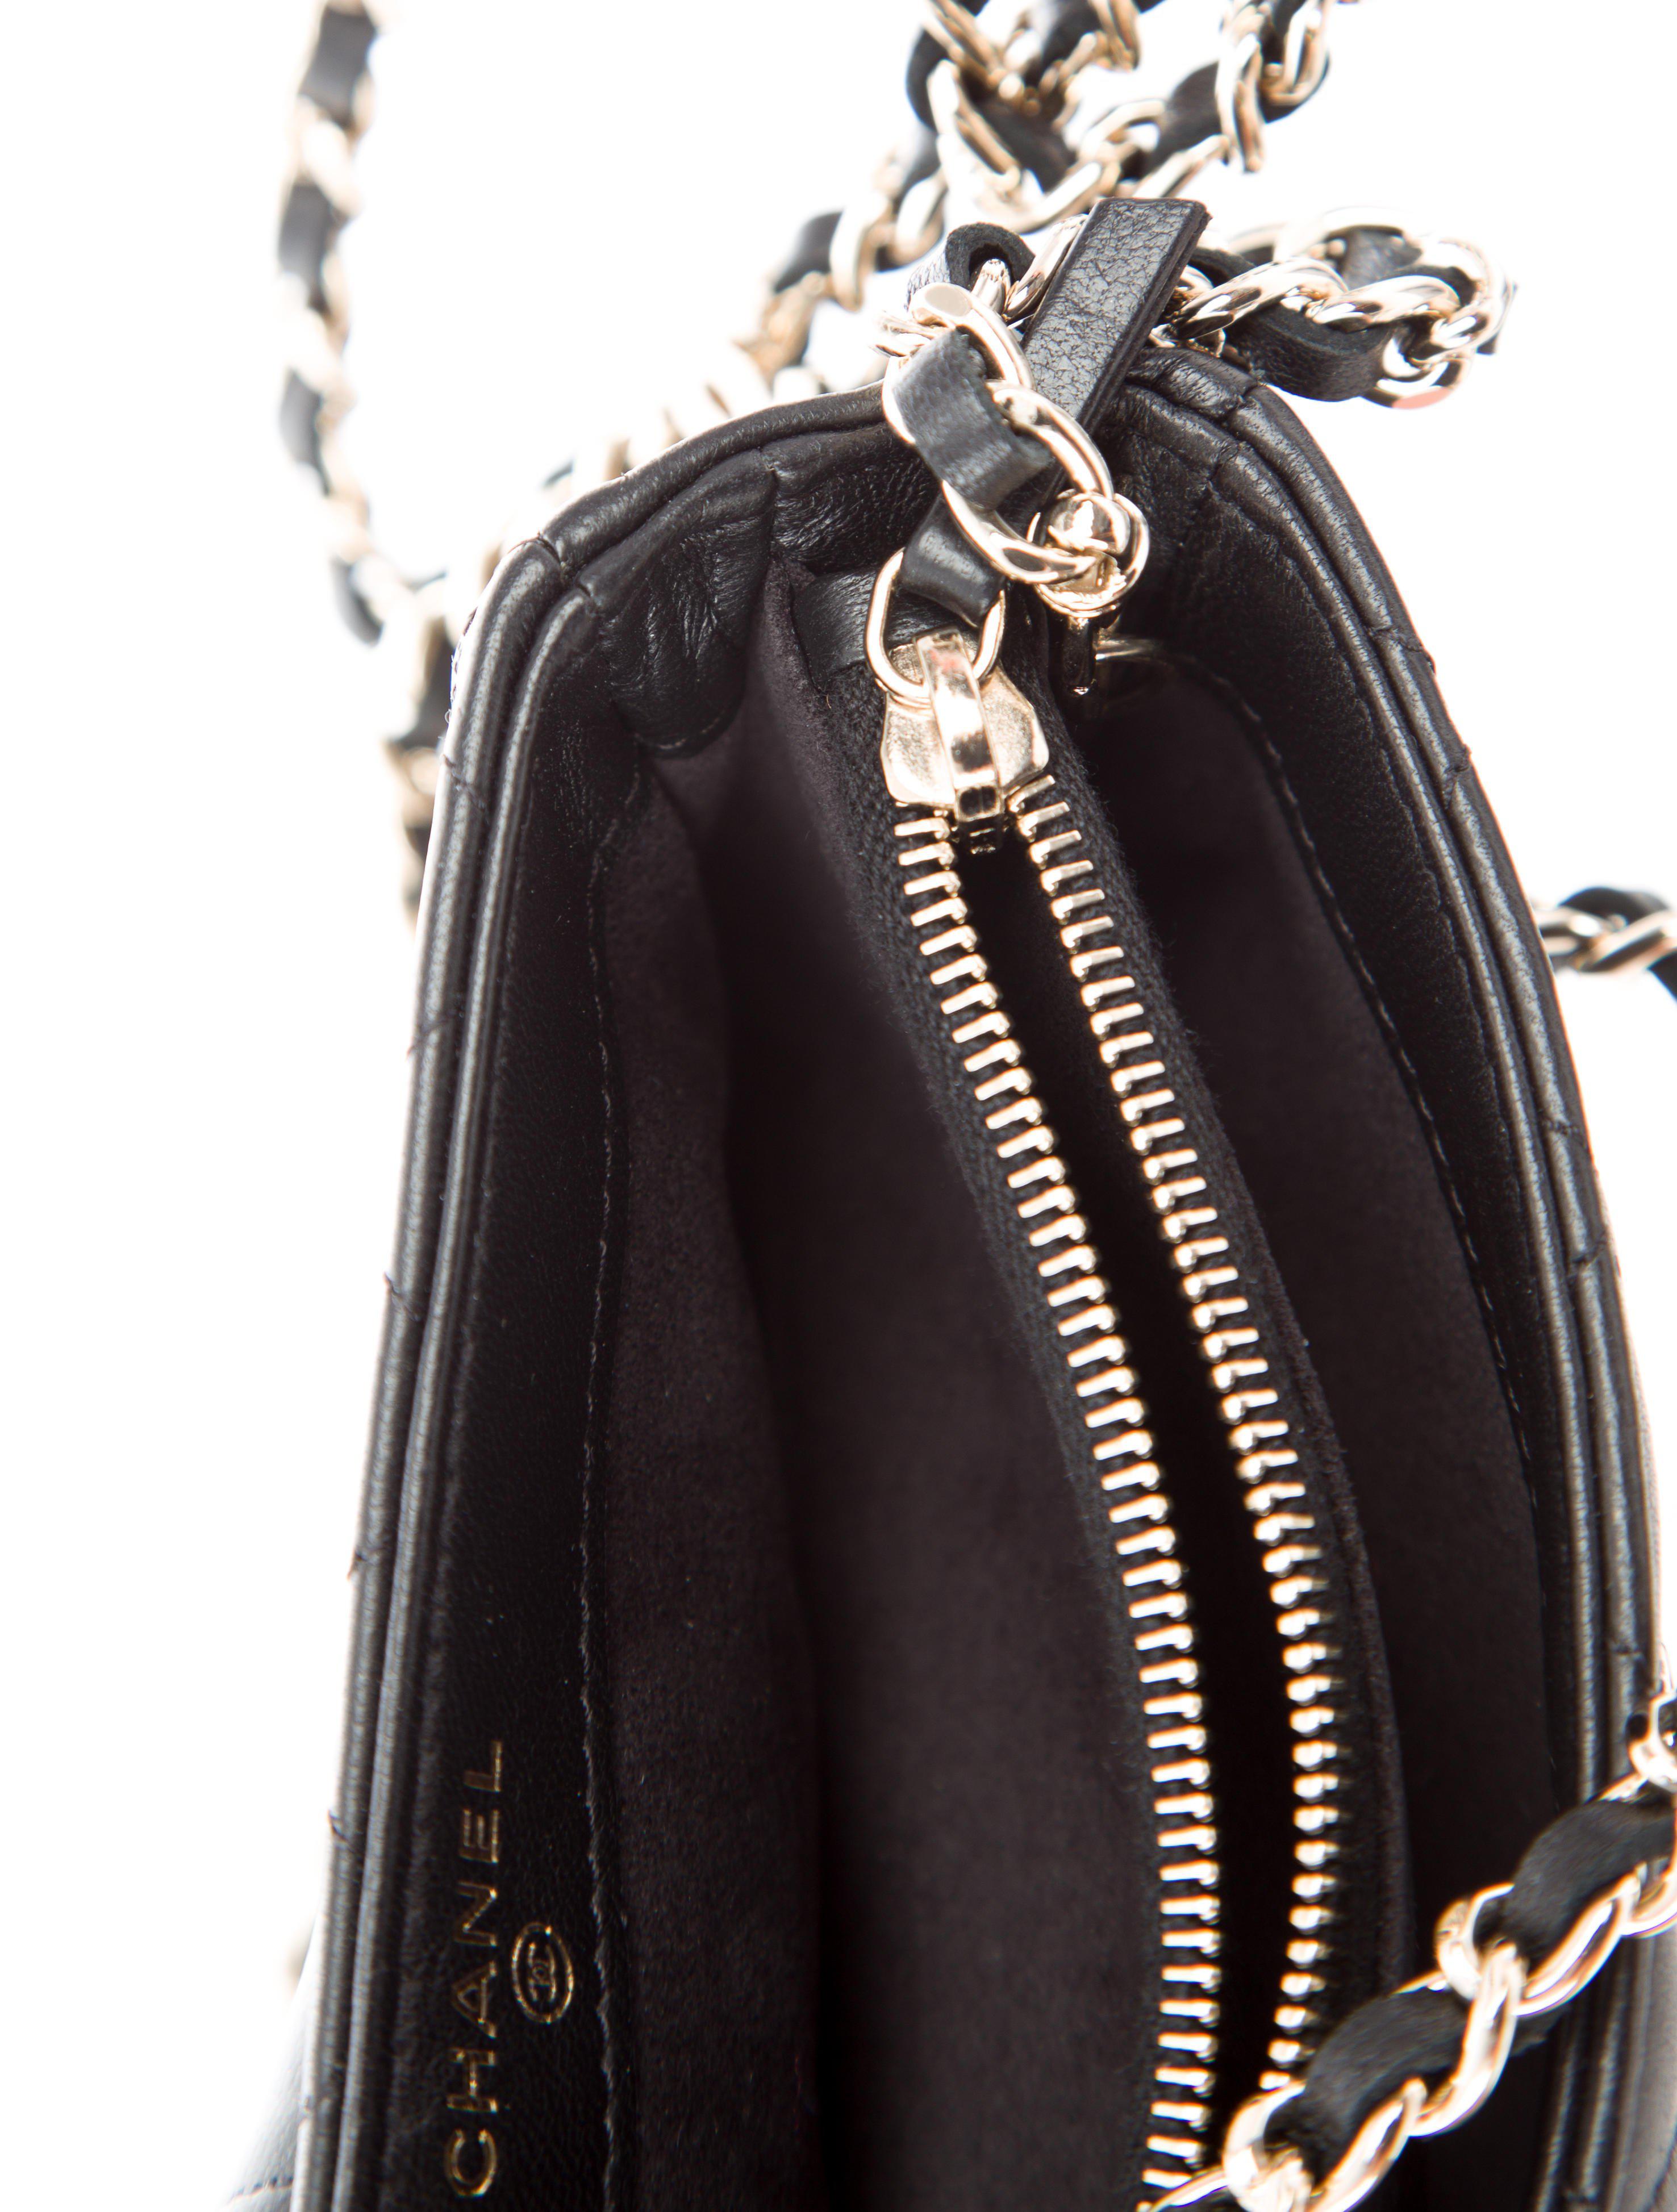 Lyst - Chanel O-phone Holder Crossbody Bag Black in Metallic